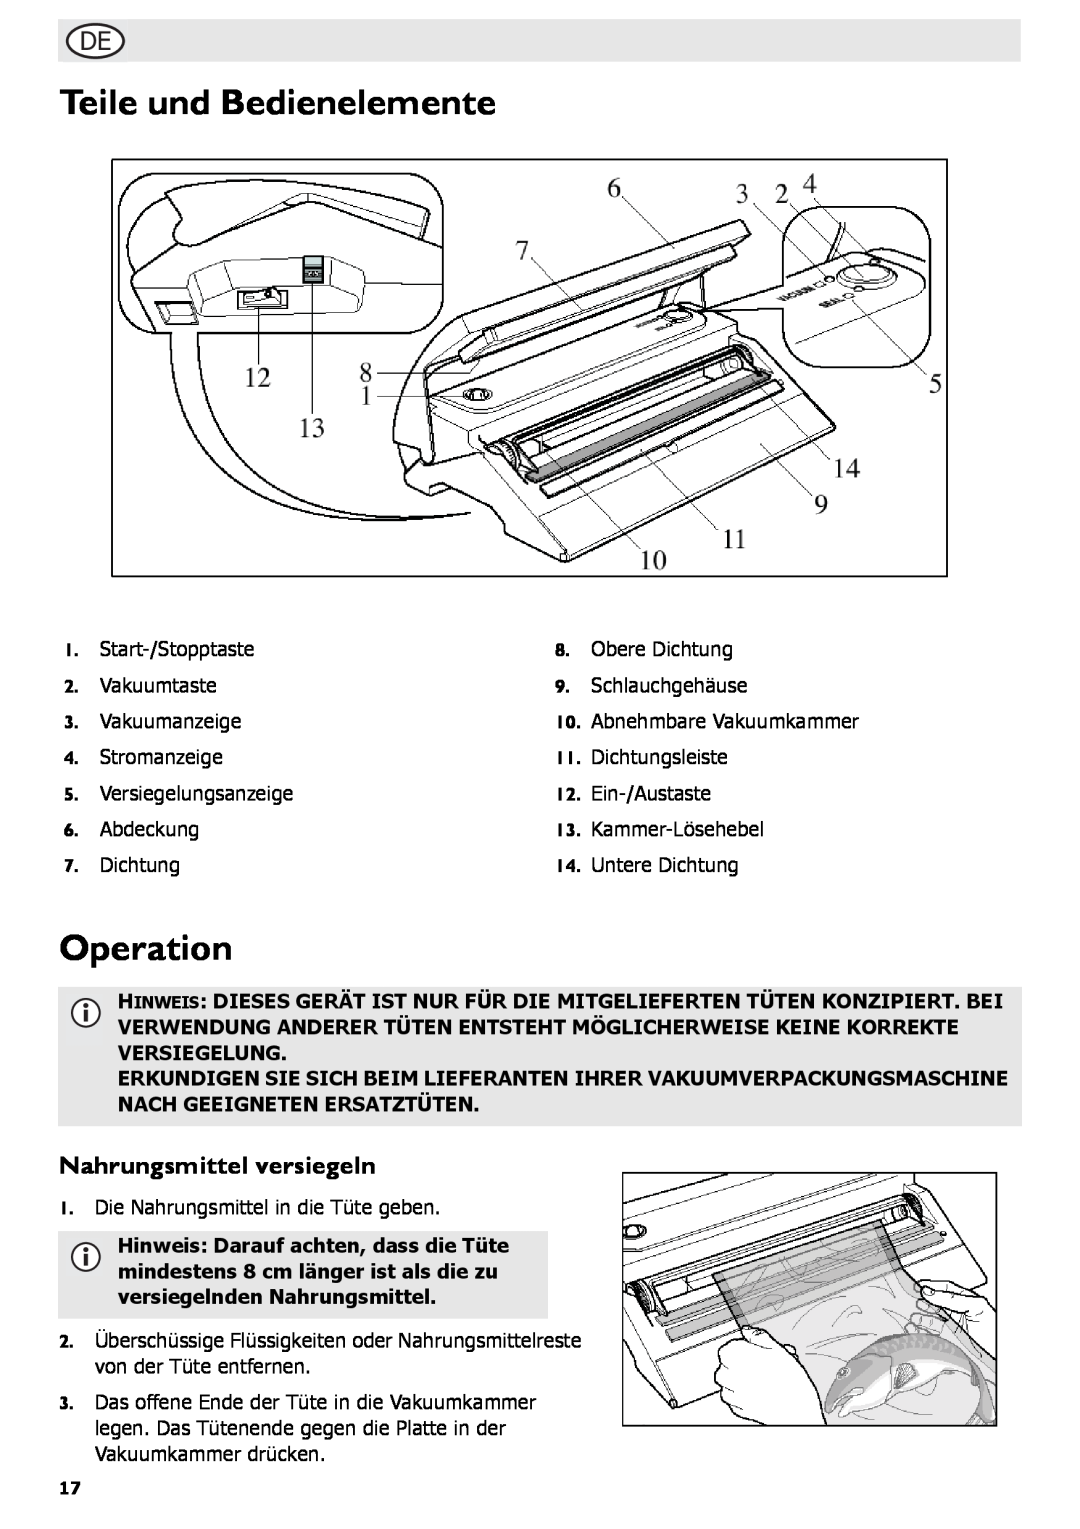 Buffalo Tools S097 instruction manual Teile und Bedienelemente, Nahrungsmittel versiegeln, Operation 